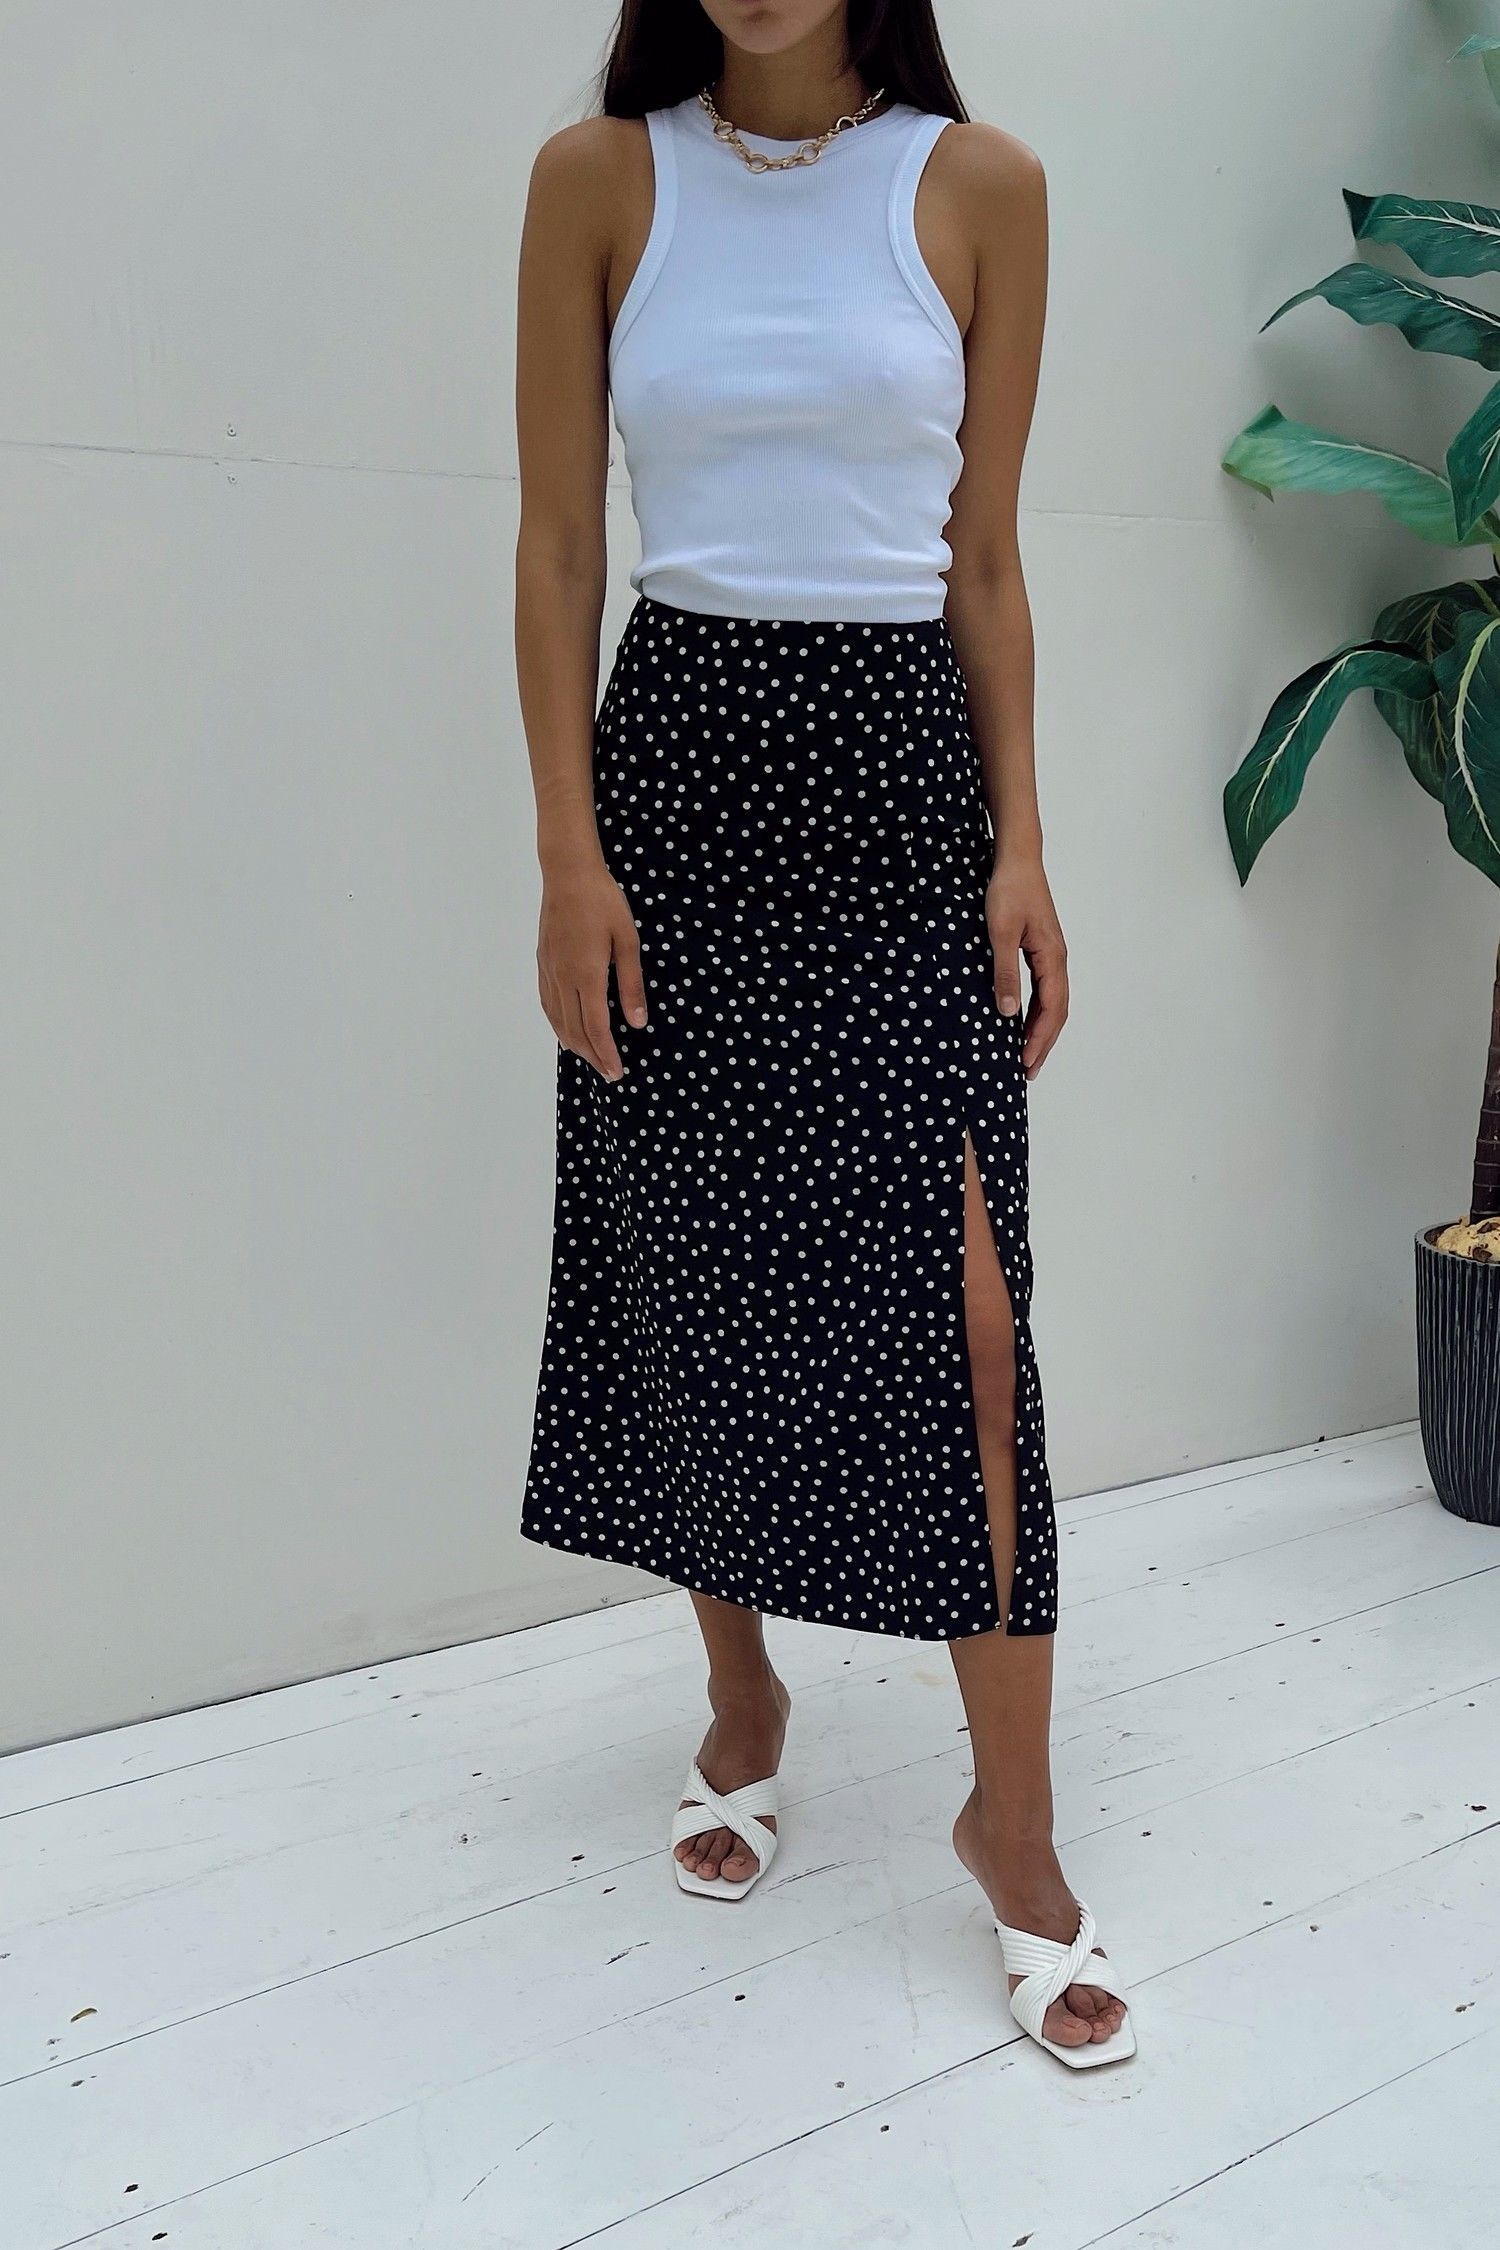 Midi skirt n black with polka dot